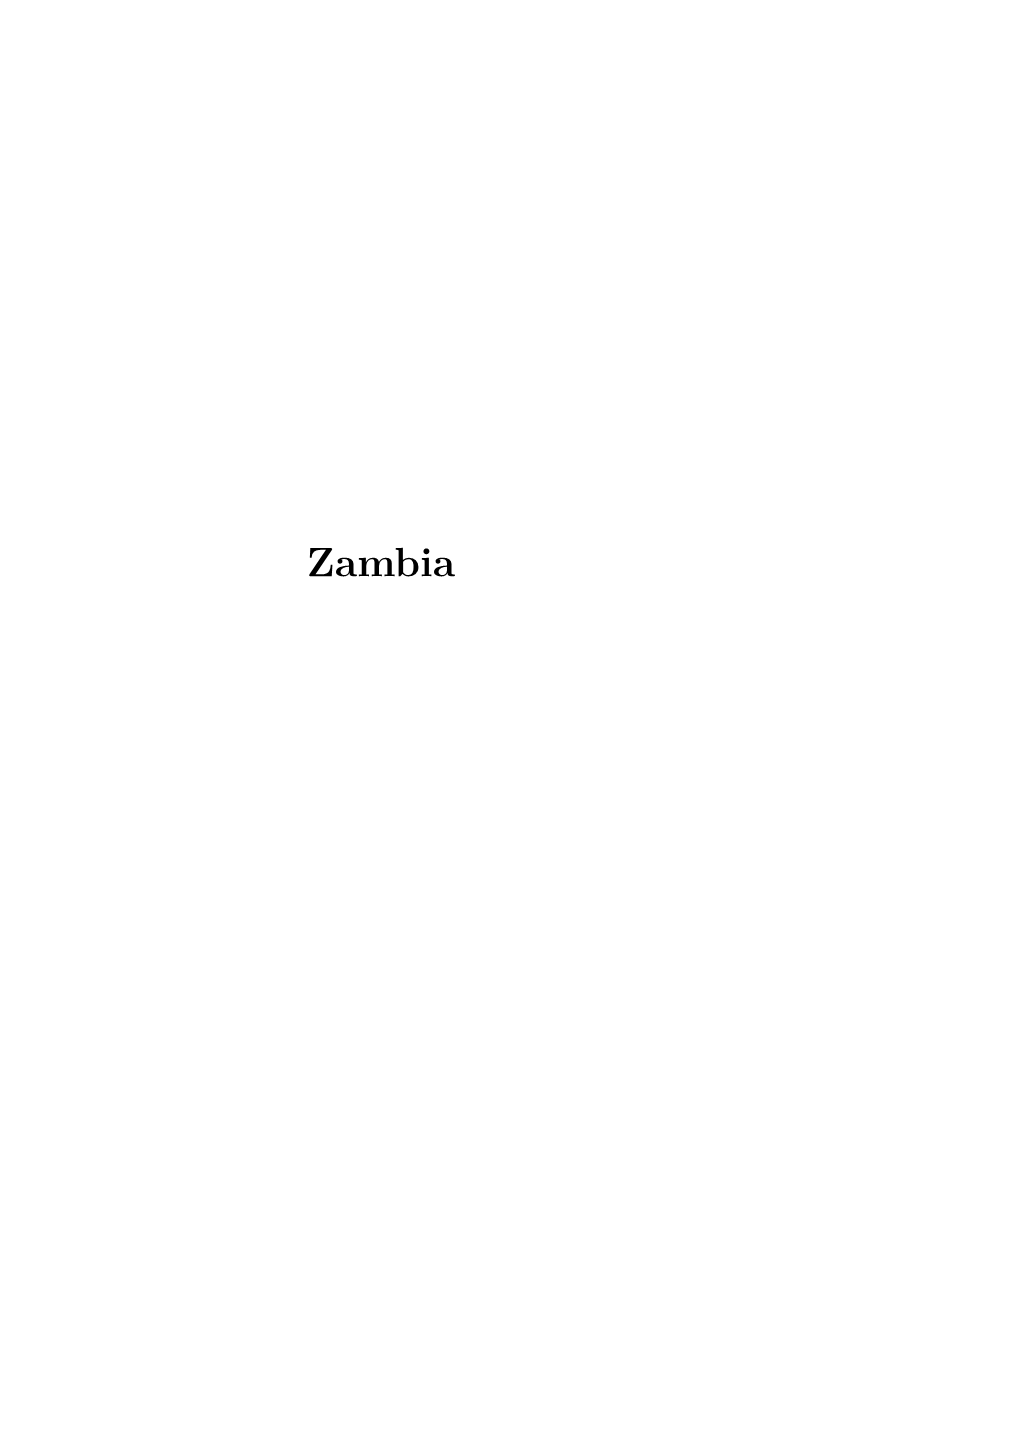 Ethnicity in Zambia